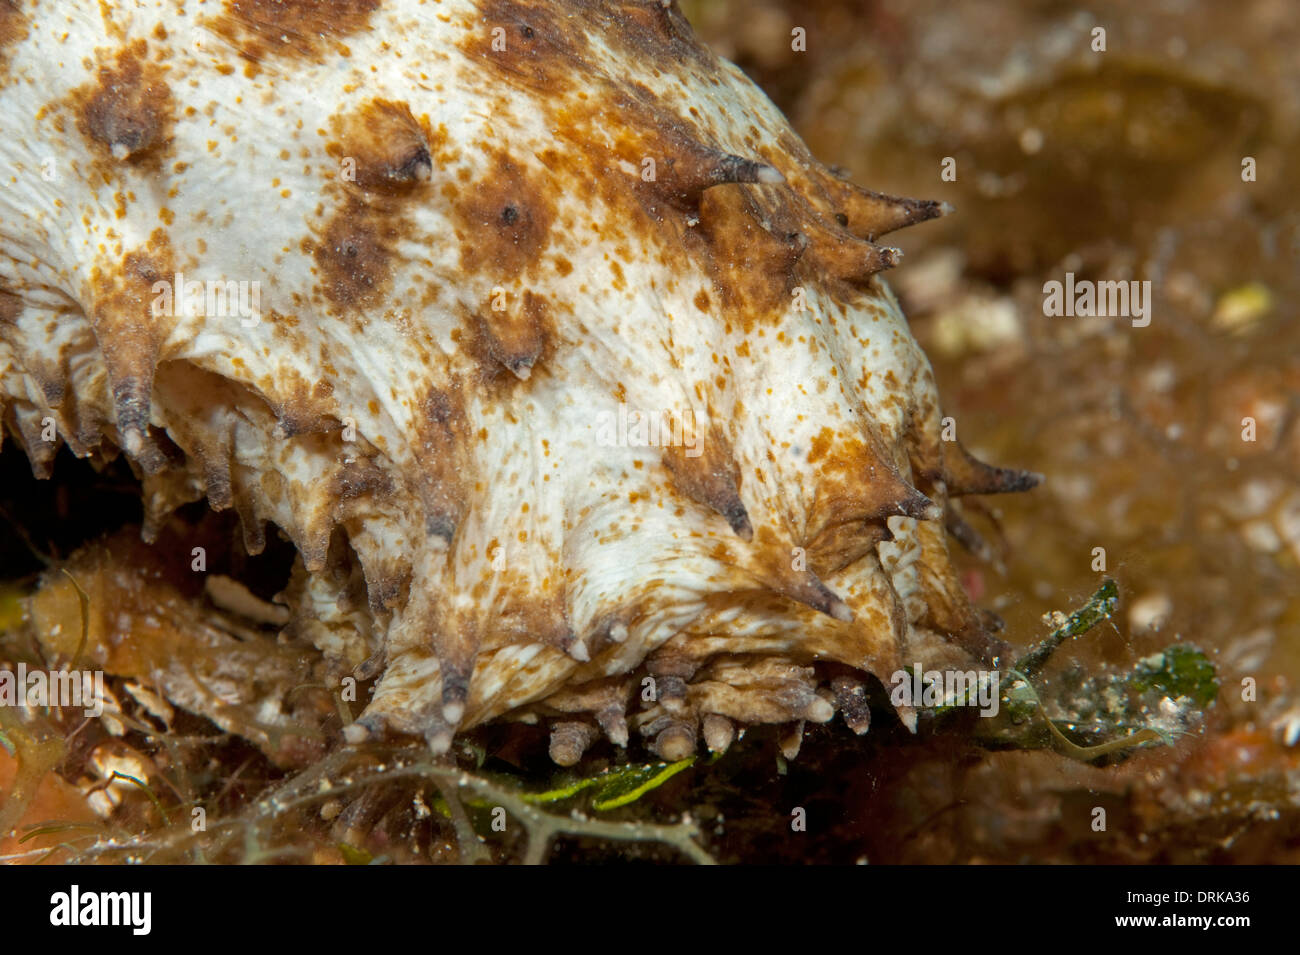 Une queue de tigre de concombre de mer dans l'alimentation de la petite Caïman, Îles Caïmans. Banque D'Images